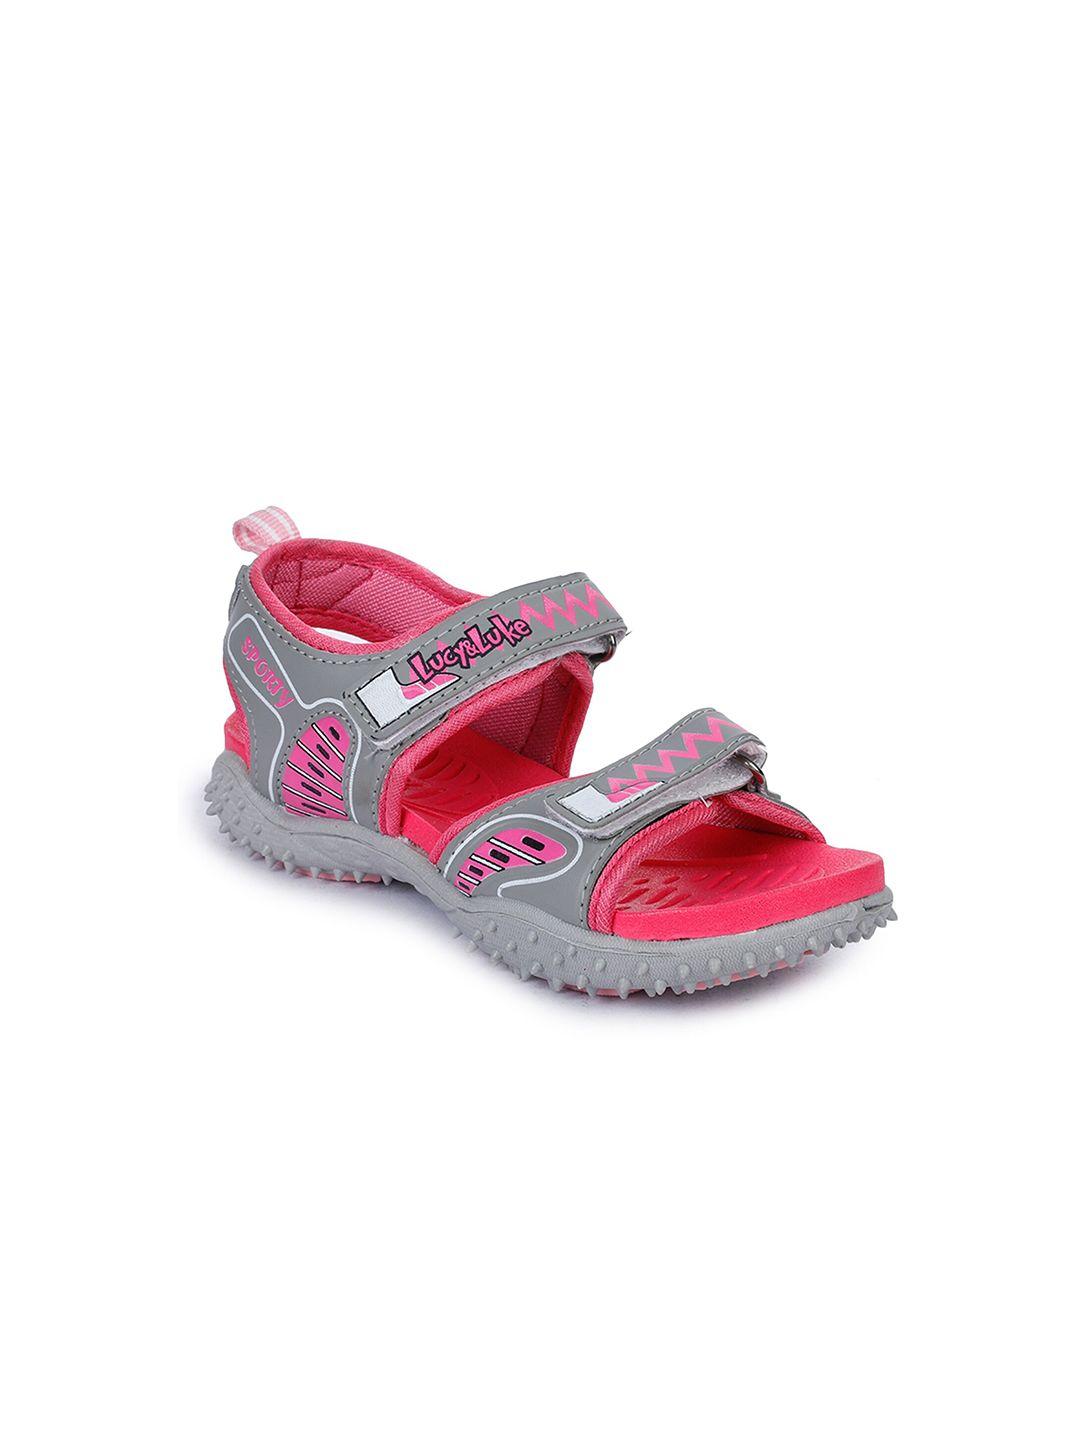 liberty-kids-pink-&-grey-printed-sports-sandals